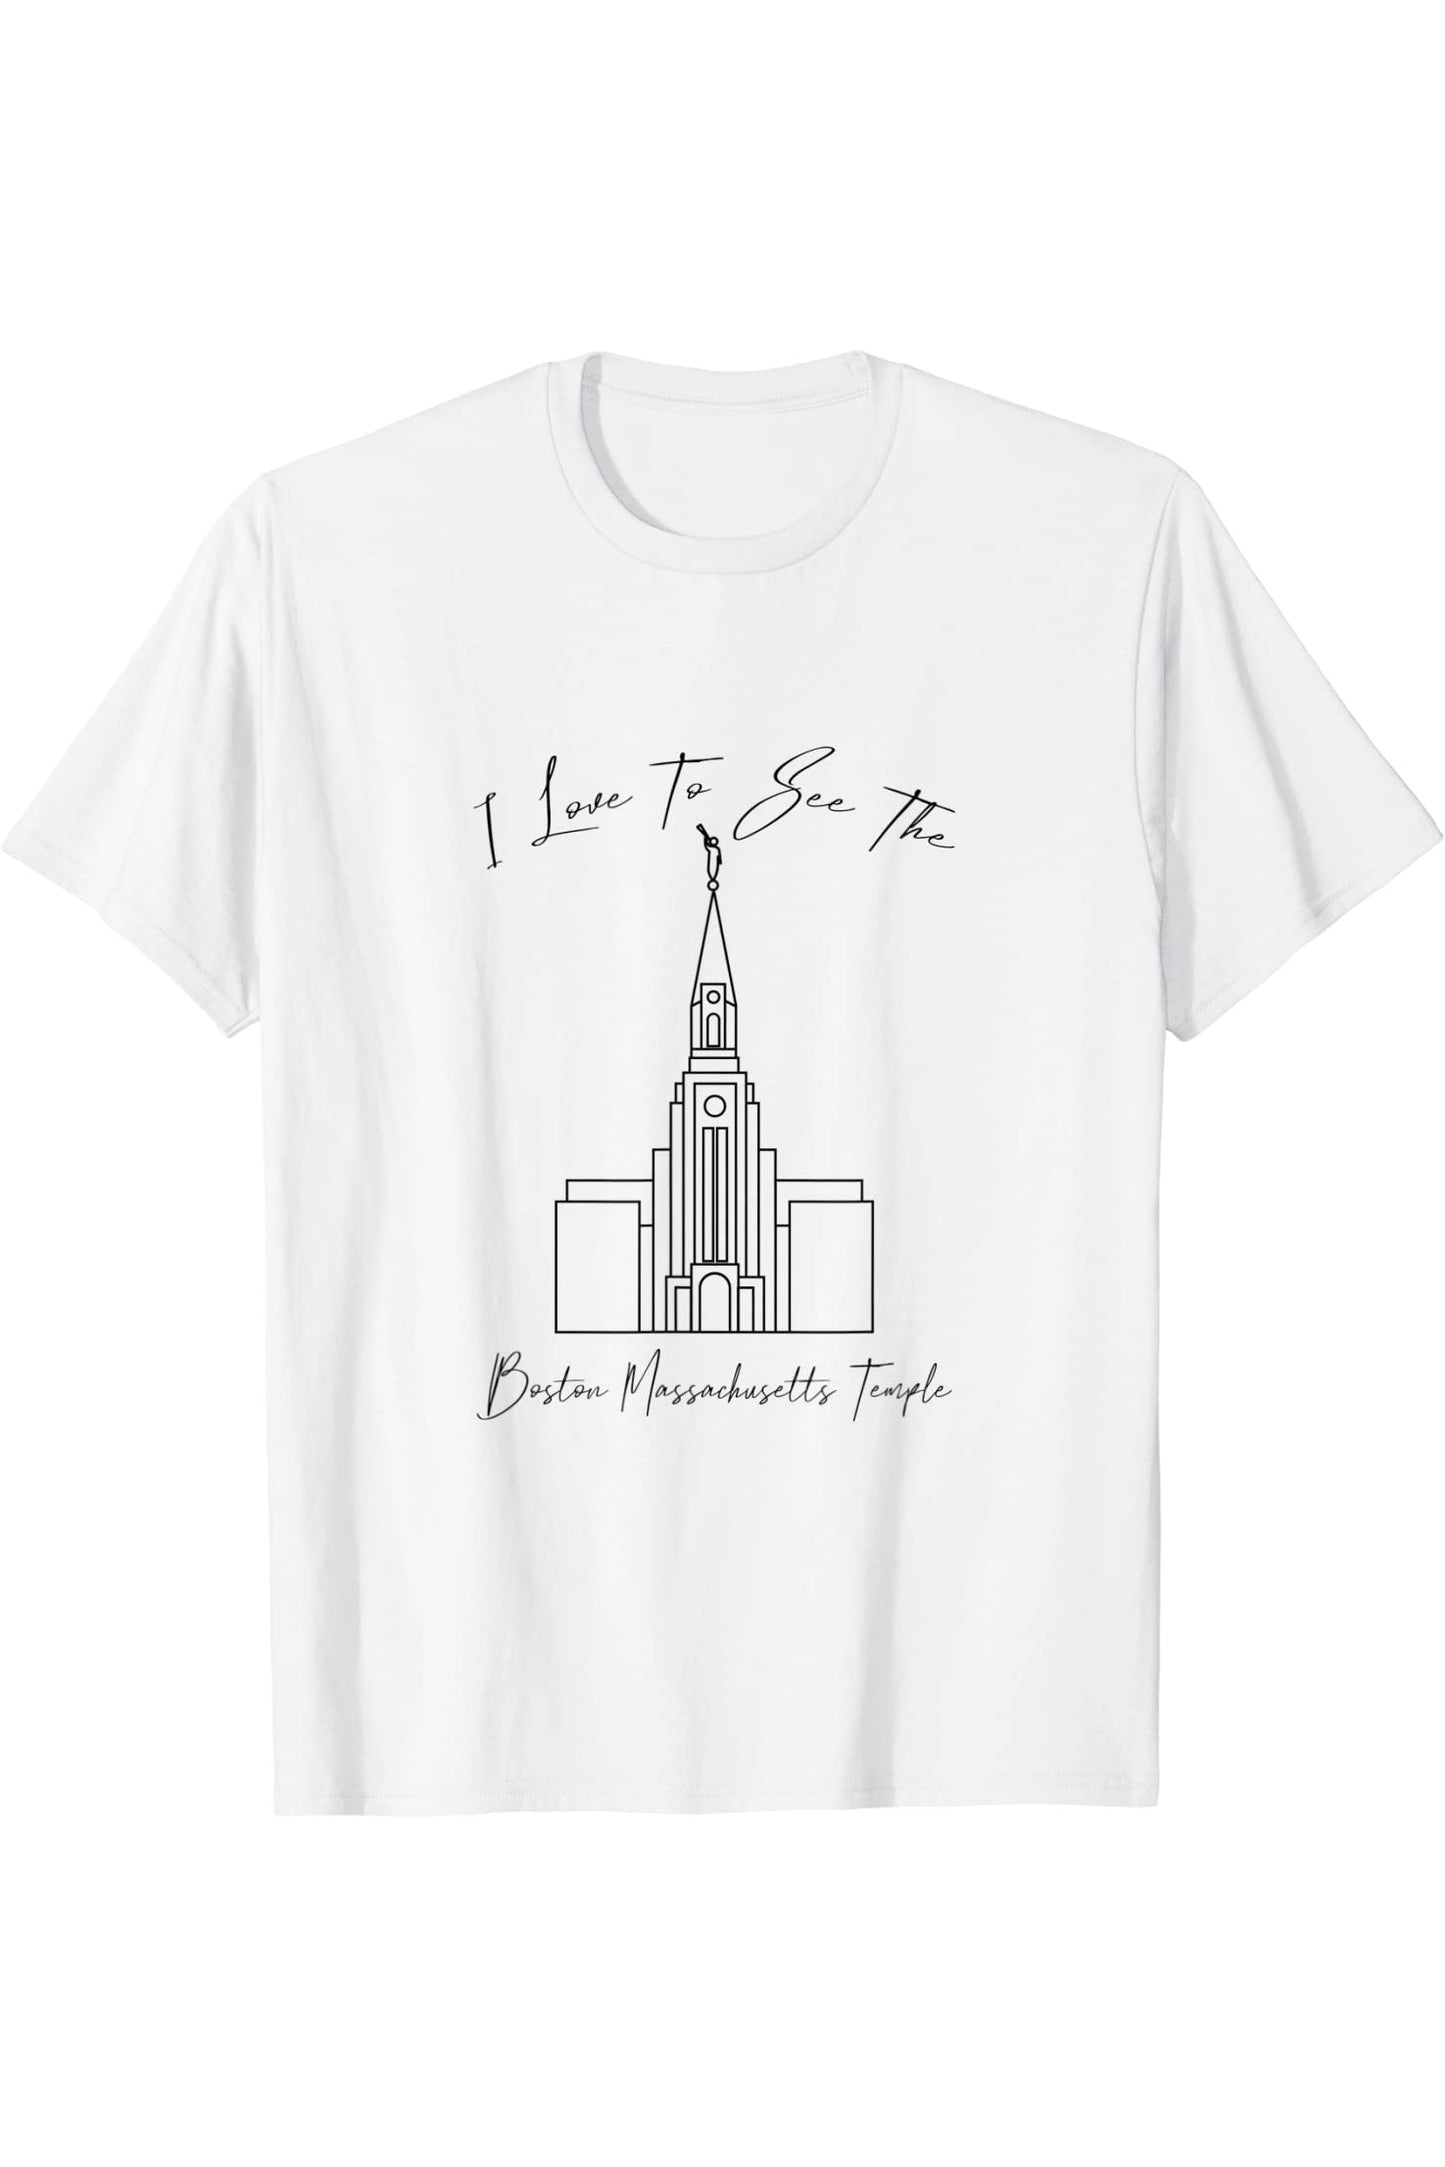 Boston Massachusetts Temple T-Shirt - Calligraphy Style (English) US